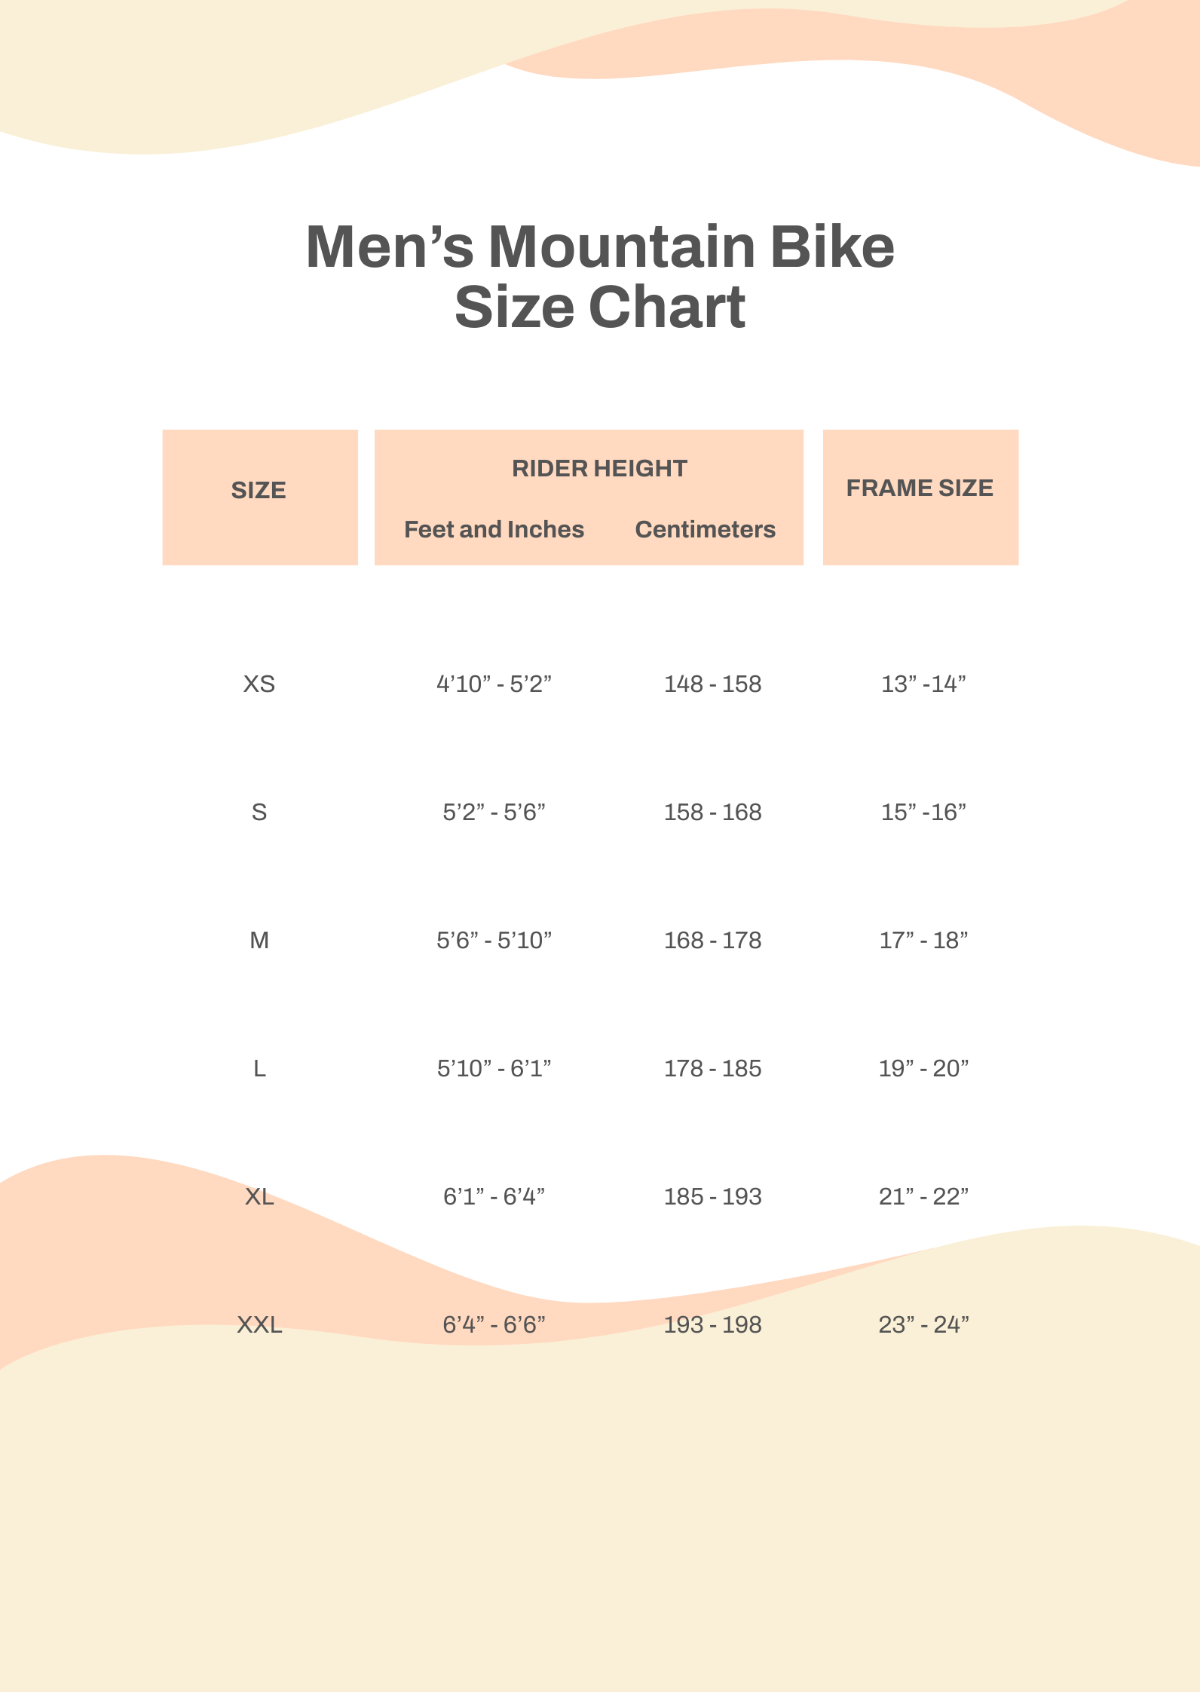 Men's Mountain Bike Size Chart Template